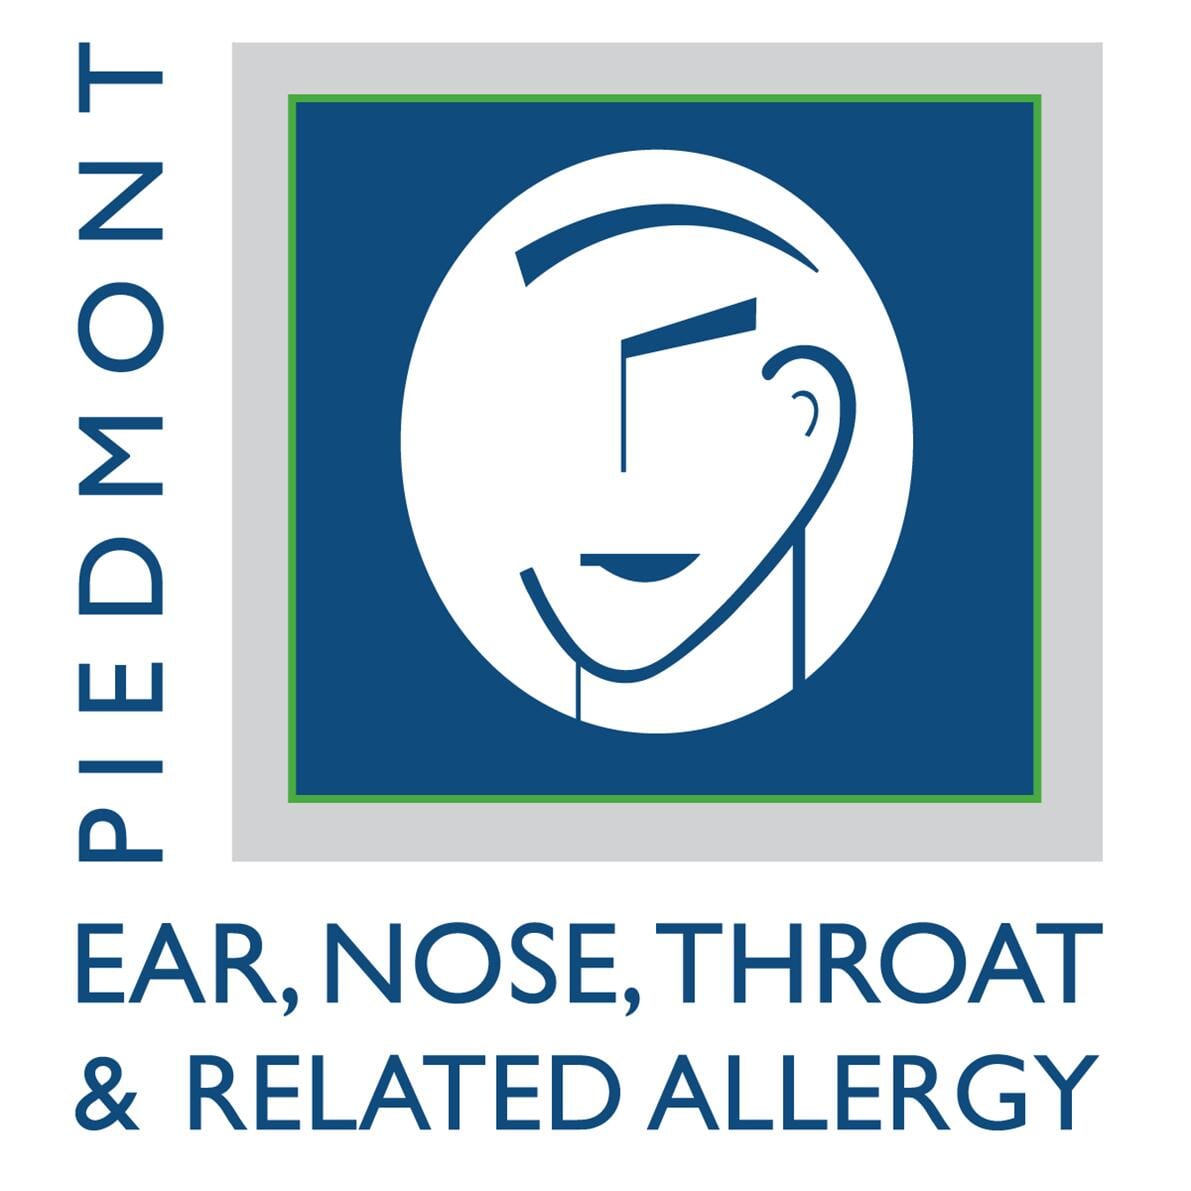 Piedmont Ear, Nose, Throat & Related Allergy Logo